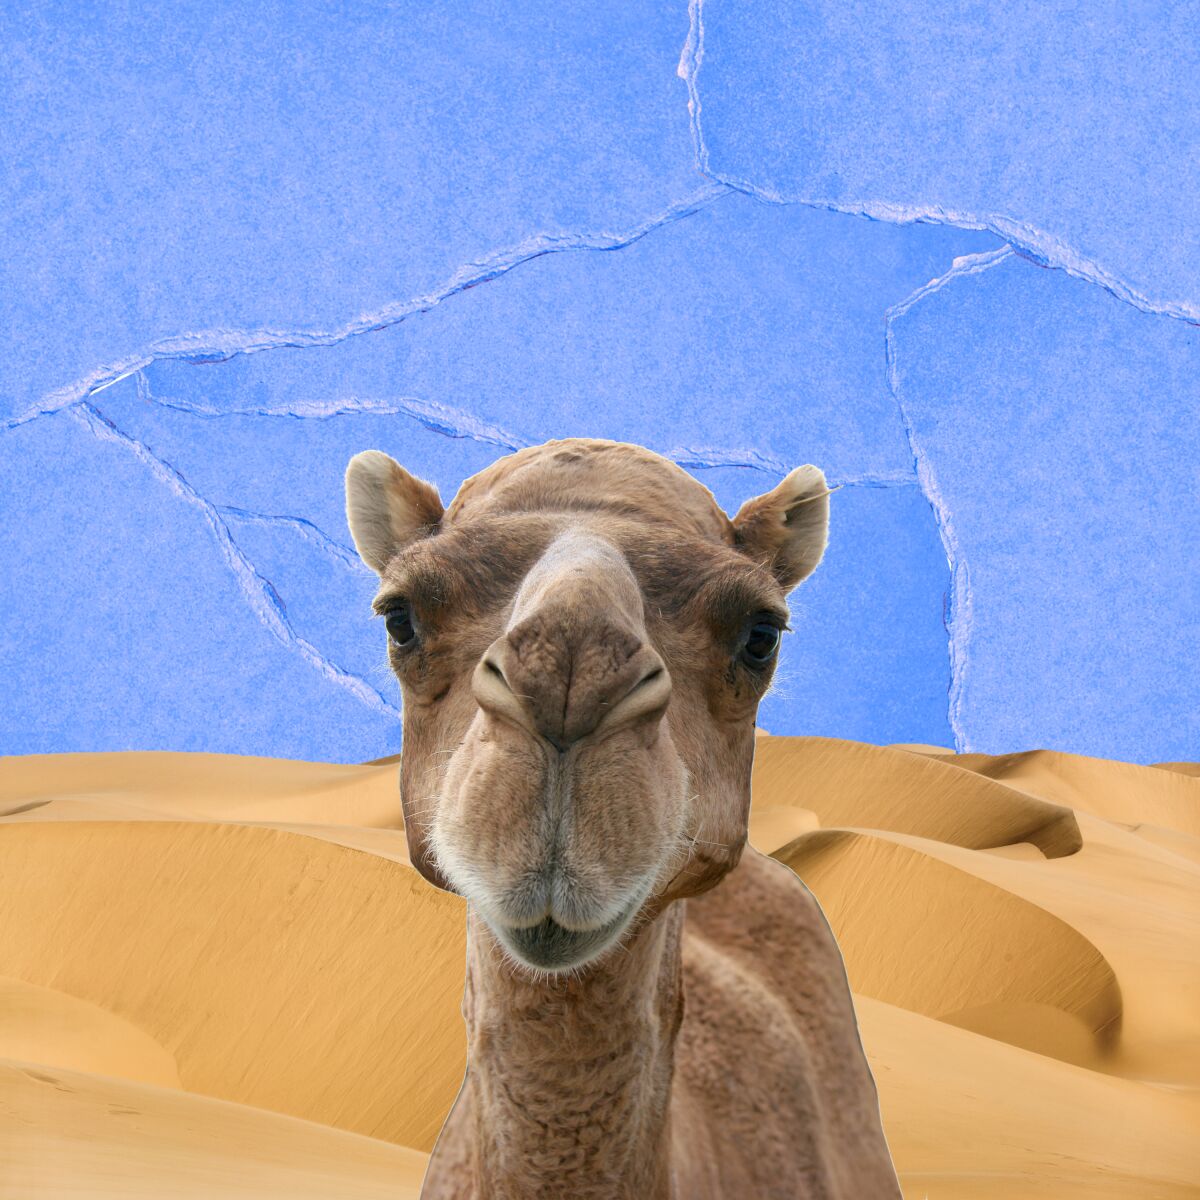 A camel on sand dunes.